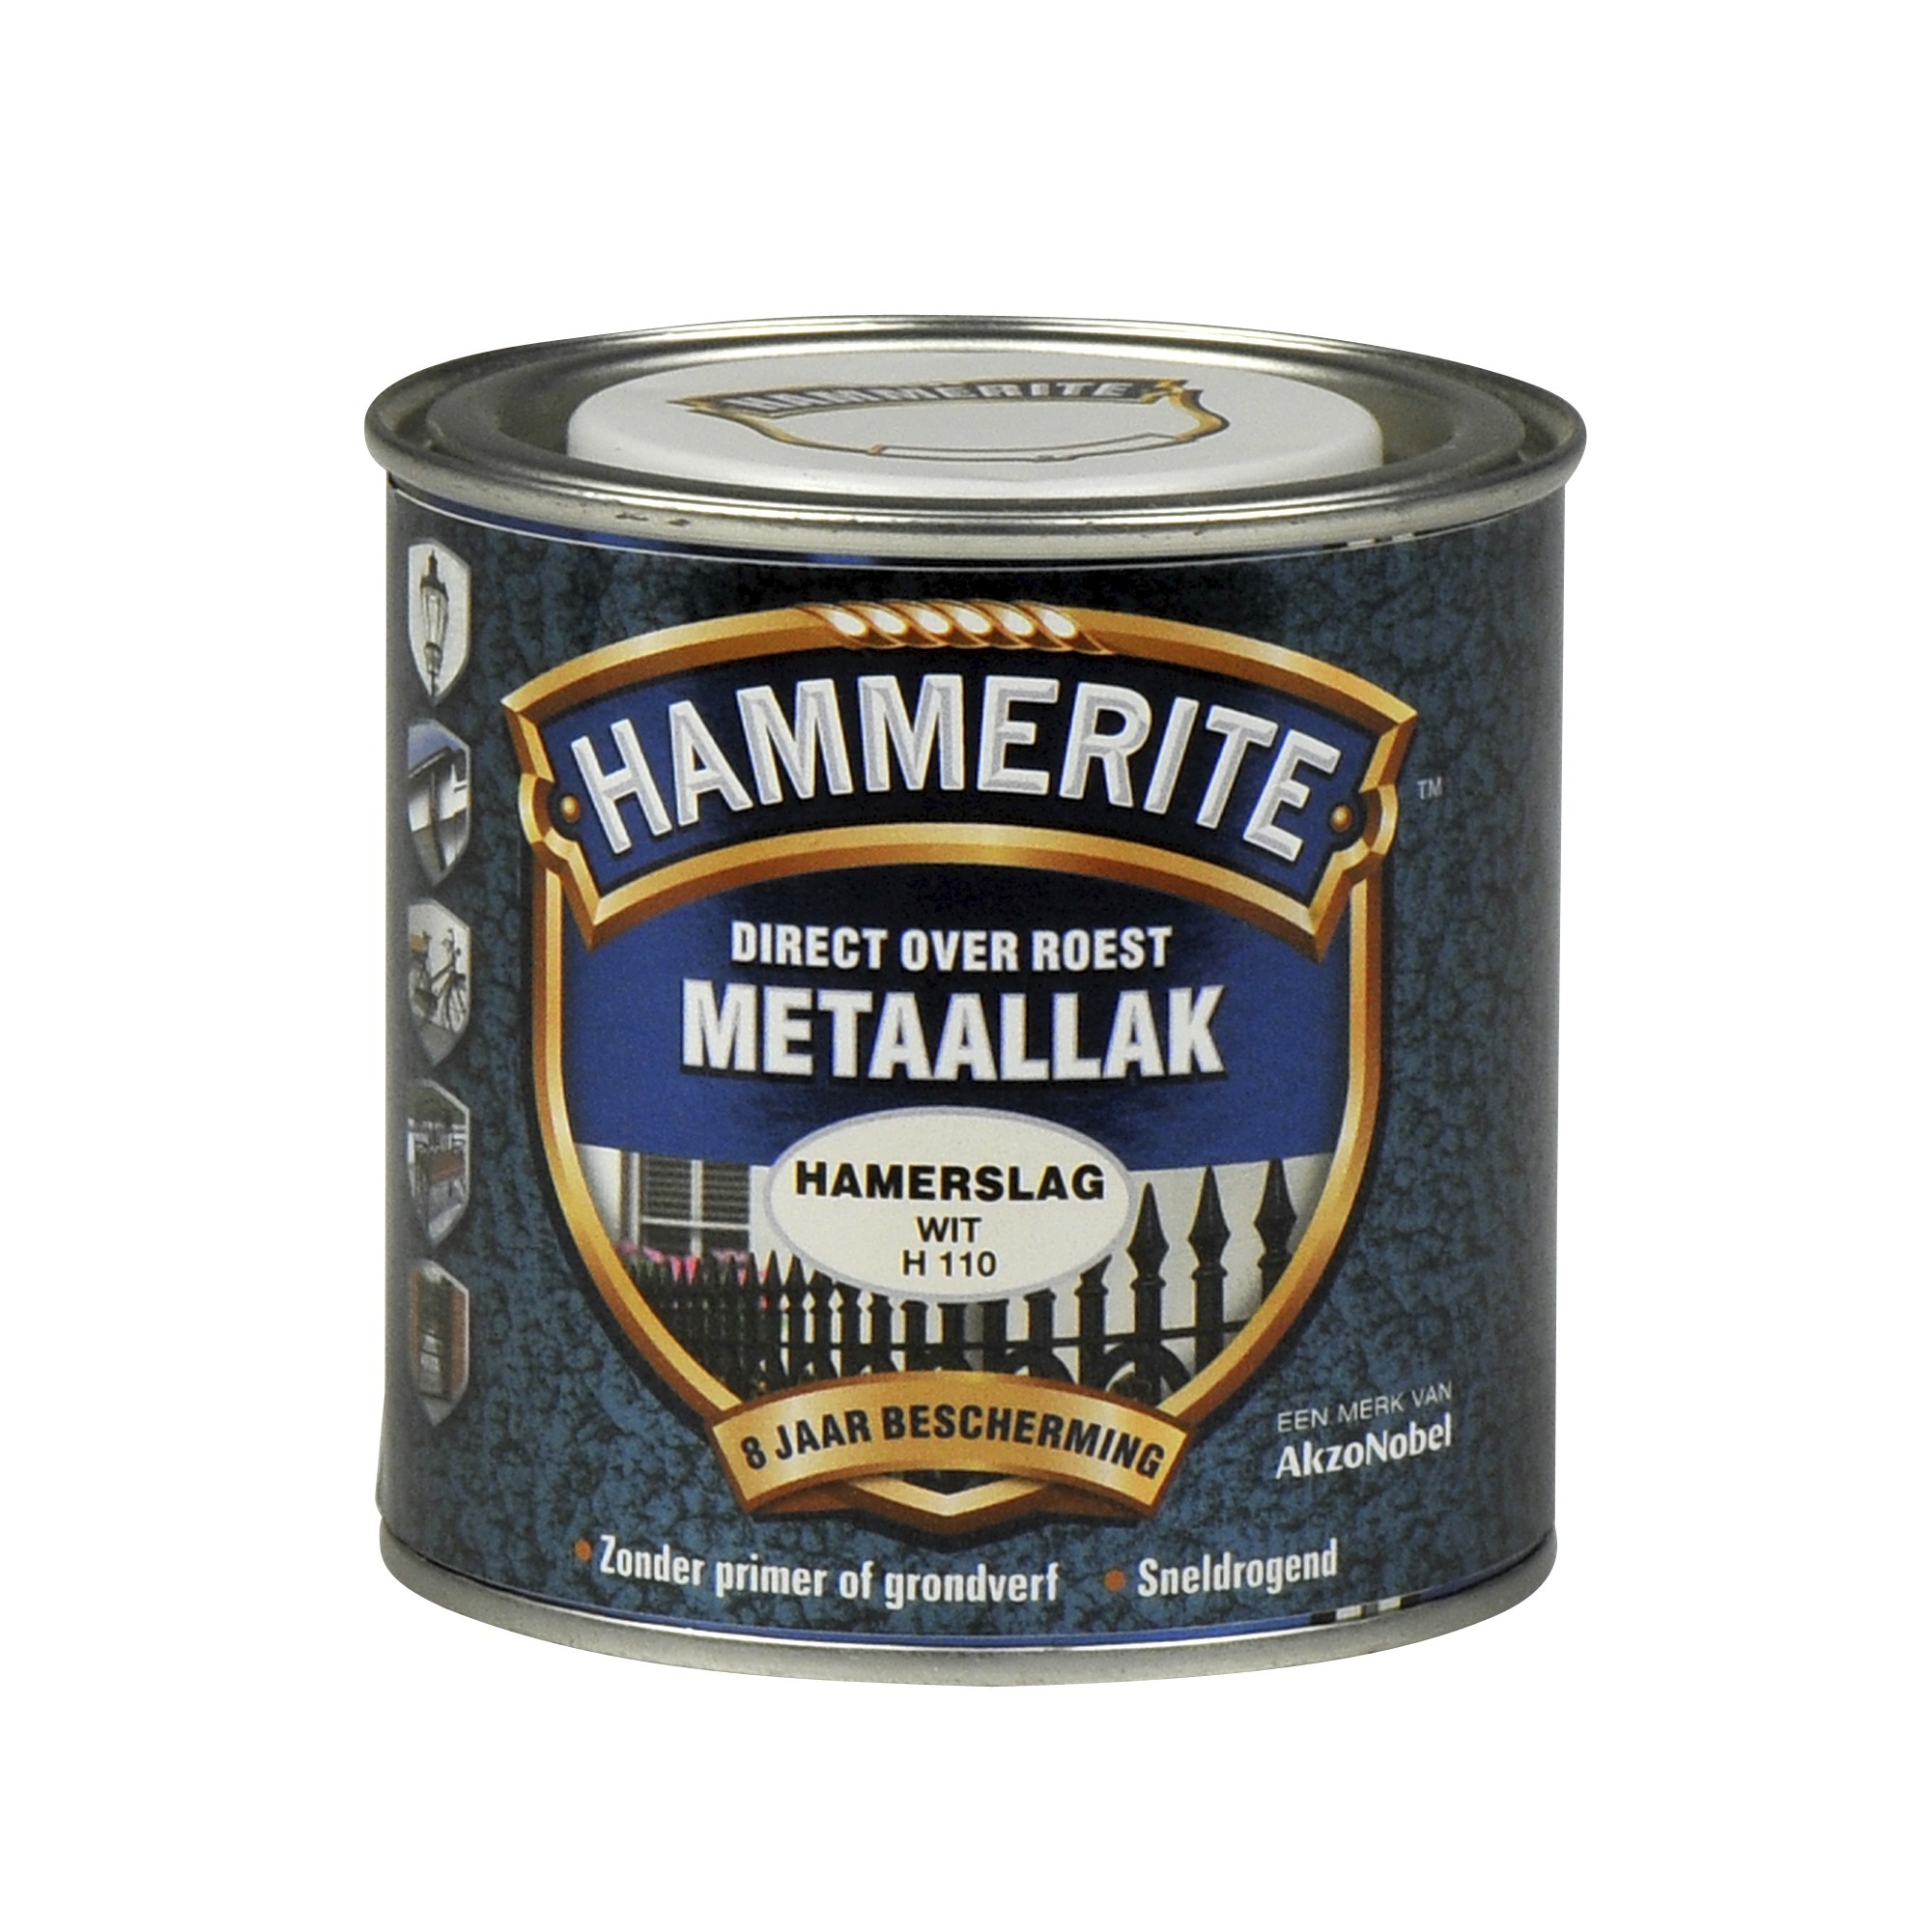 Hammerite direct over roest metaallak hamerslag wit - 250 ml